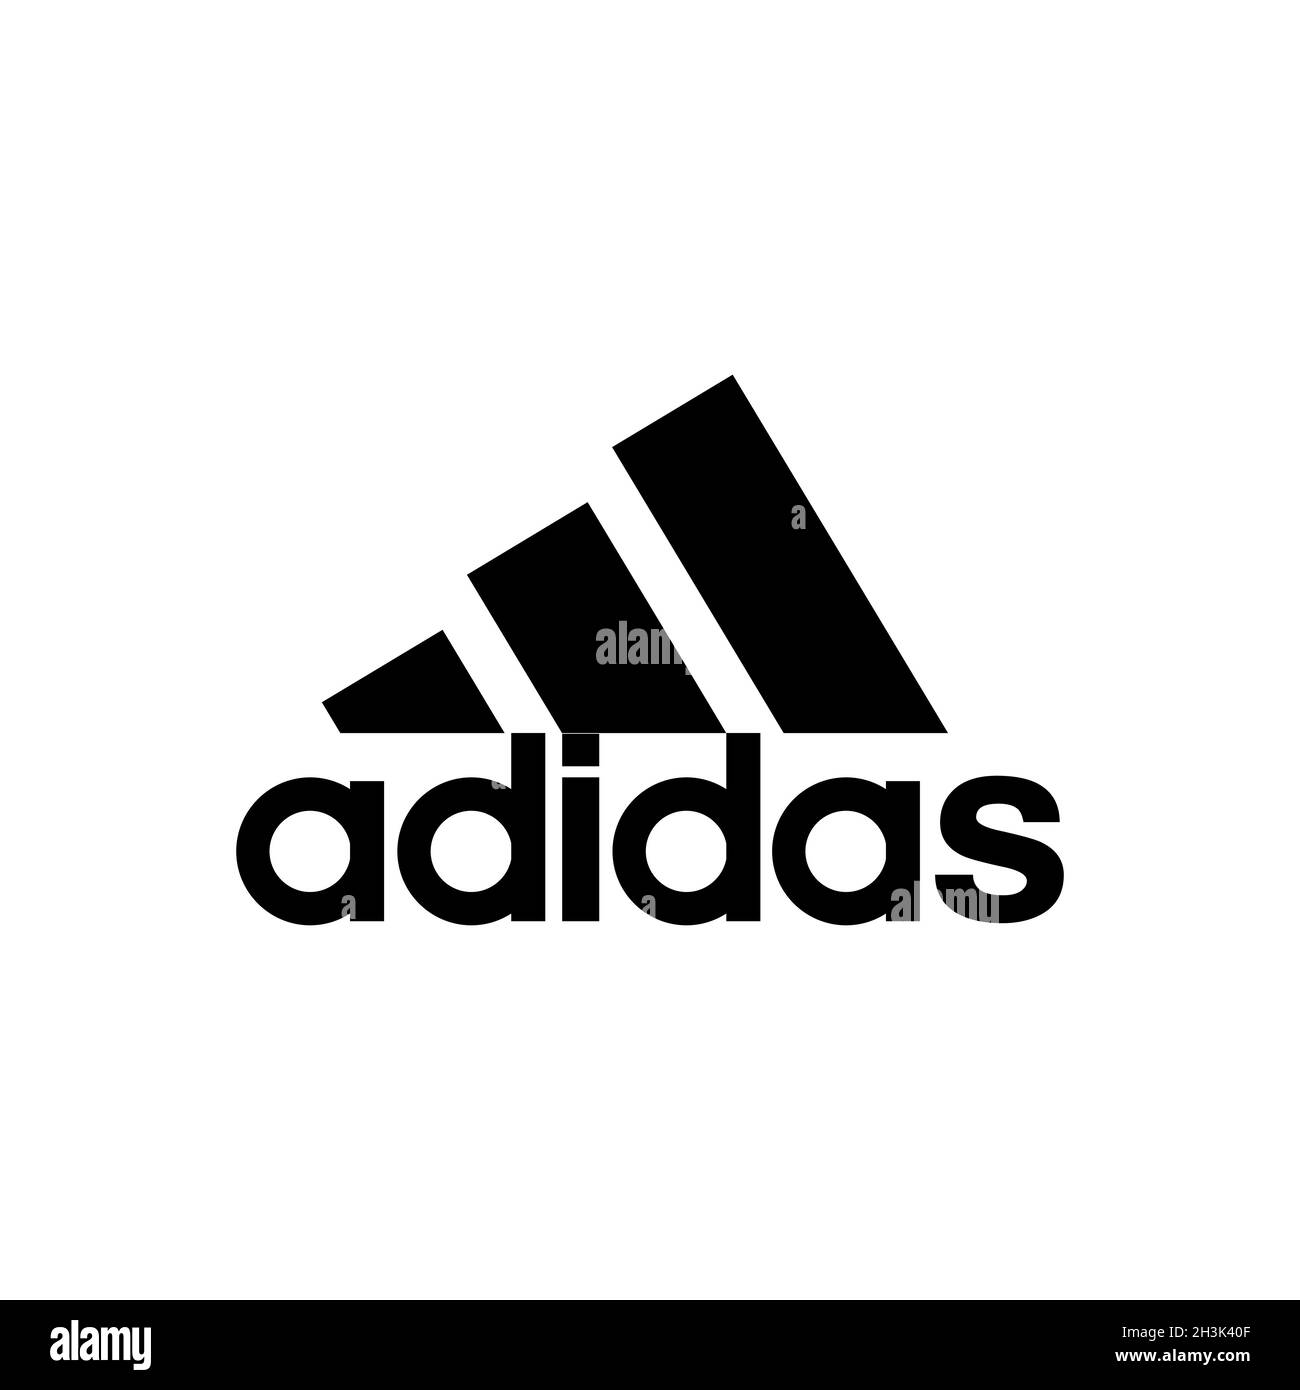 Adidas sport clothing brand logo. Editorial image. VINNITSIA, UKRAINE. JUNE 23, 2021. Stock Vector